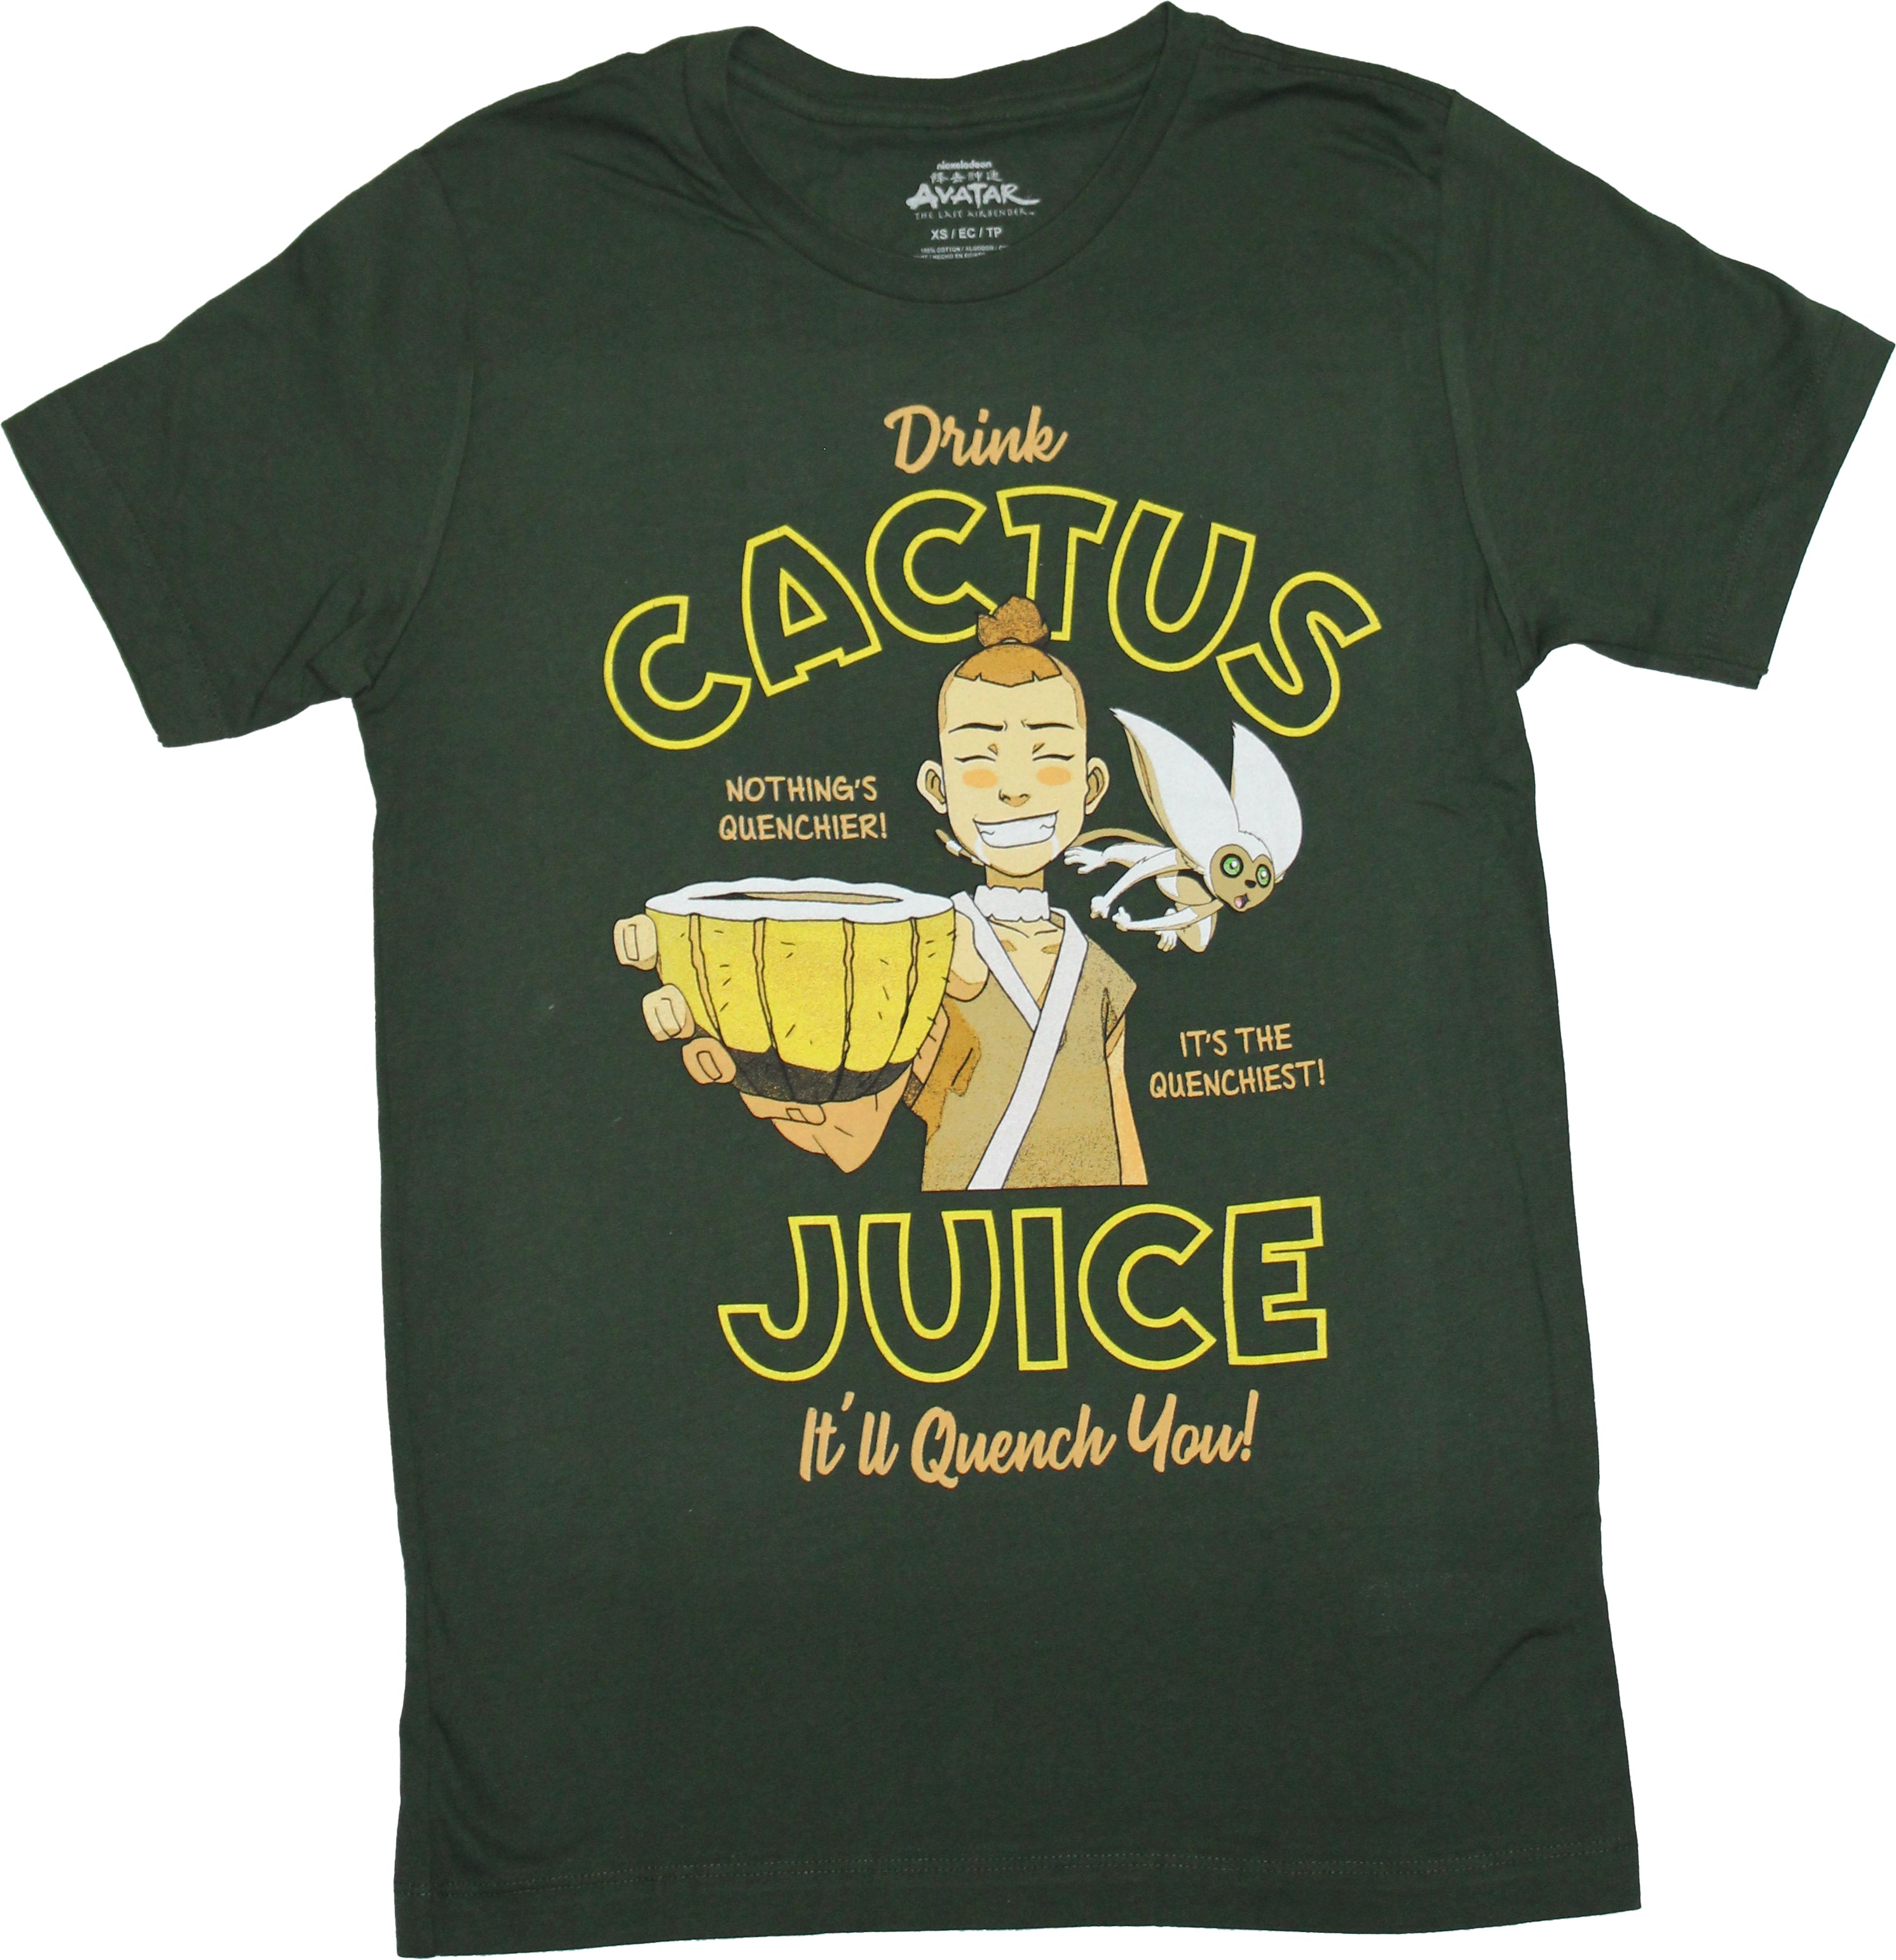 Avatar the Last Airbender Mens T-shirt - Drink Cactus Juice